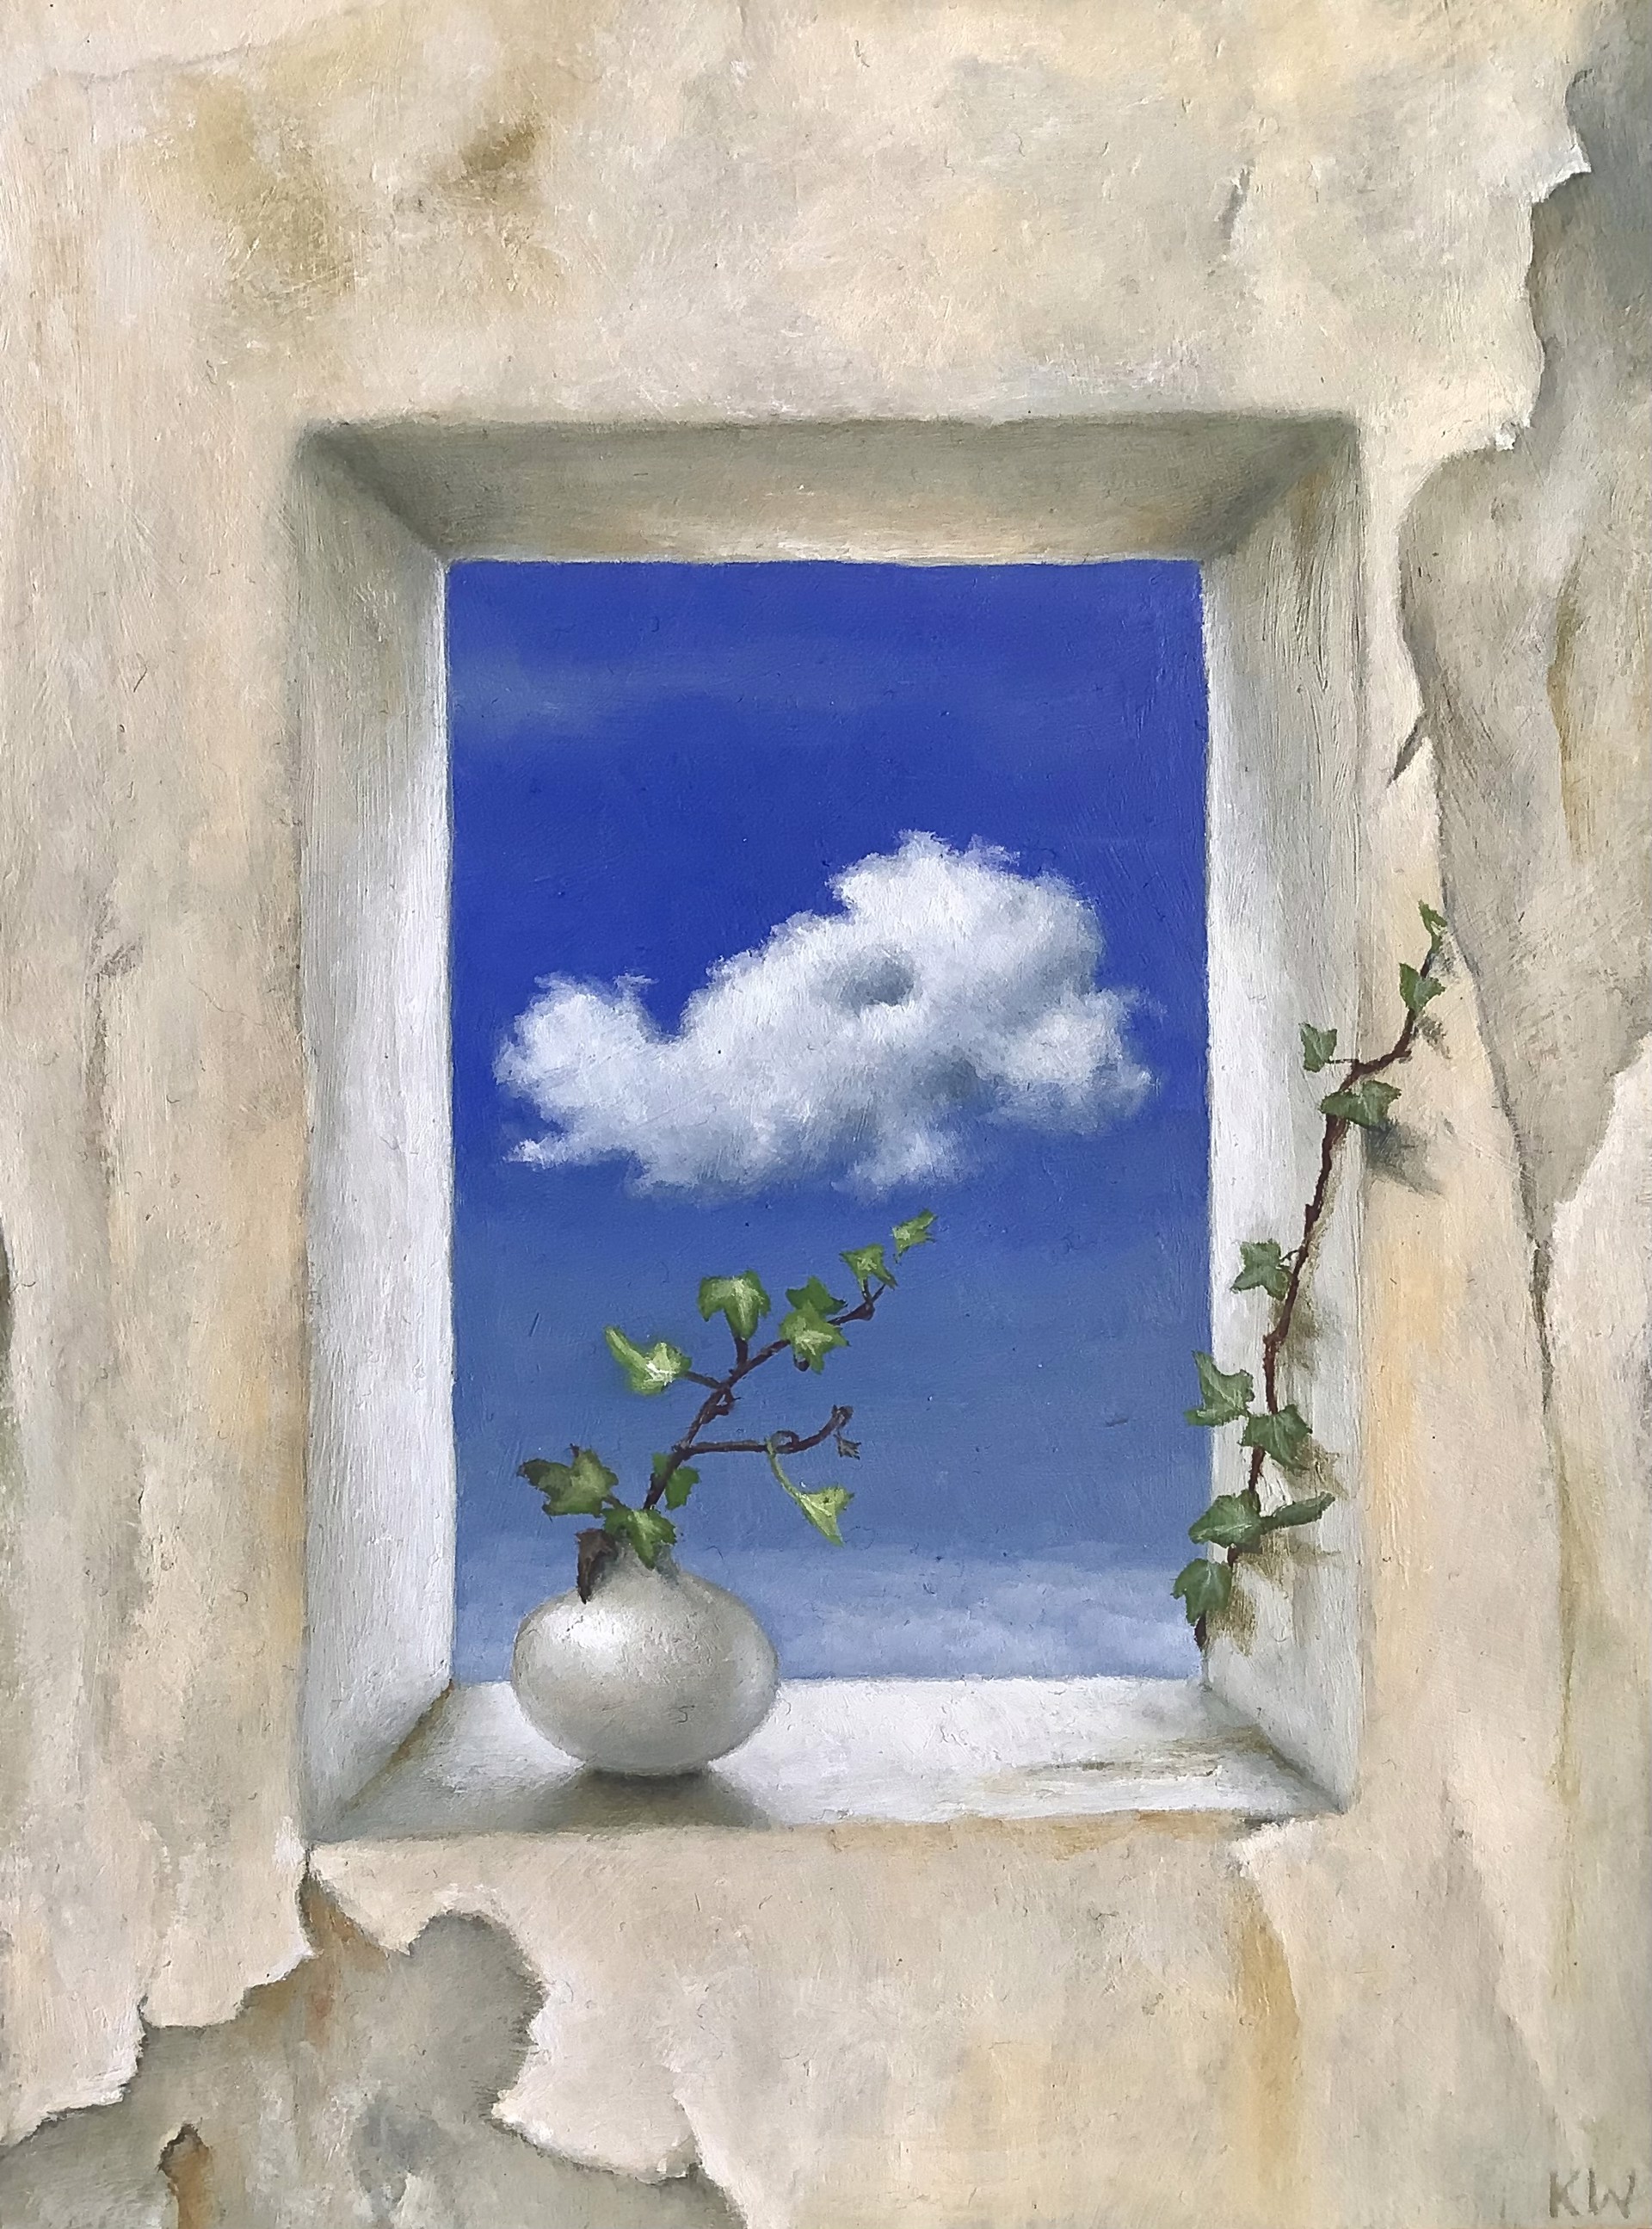 One Happy Little Cloud by Kris Wenschuh